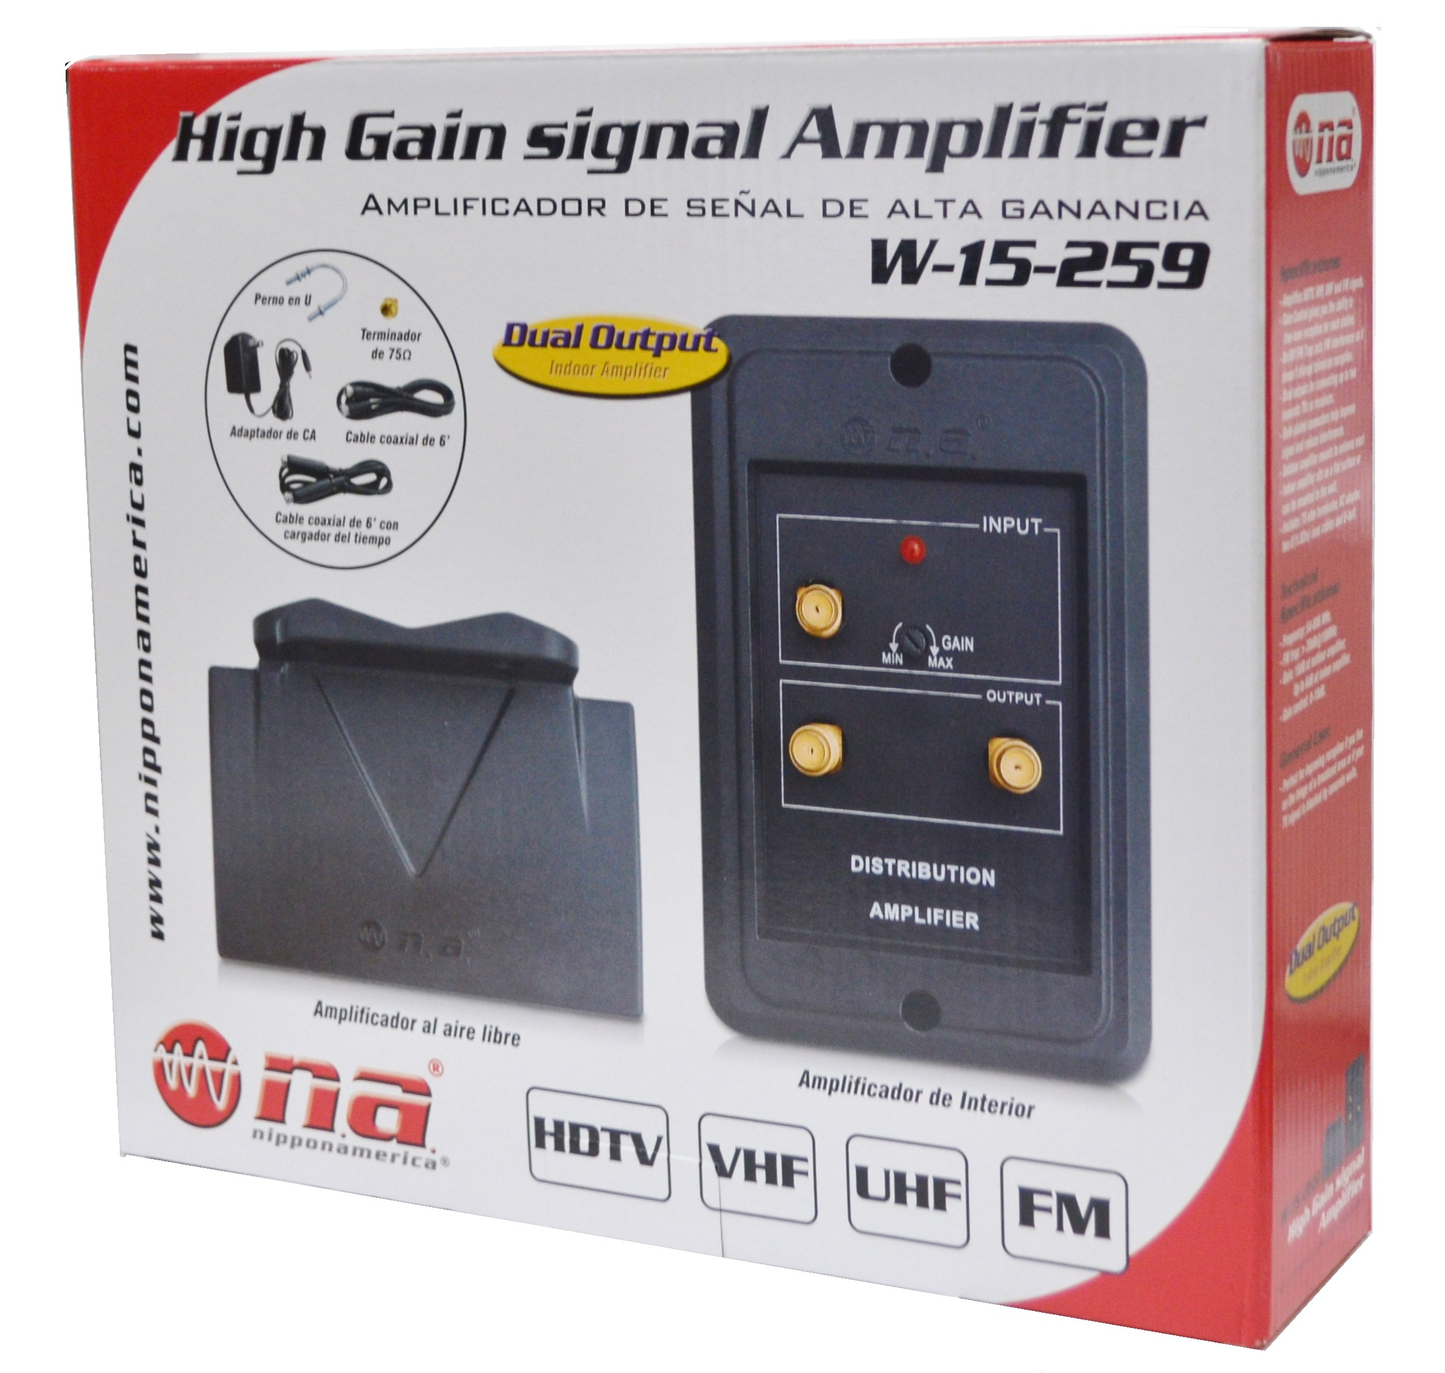 High Gain Signal Amplifier